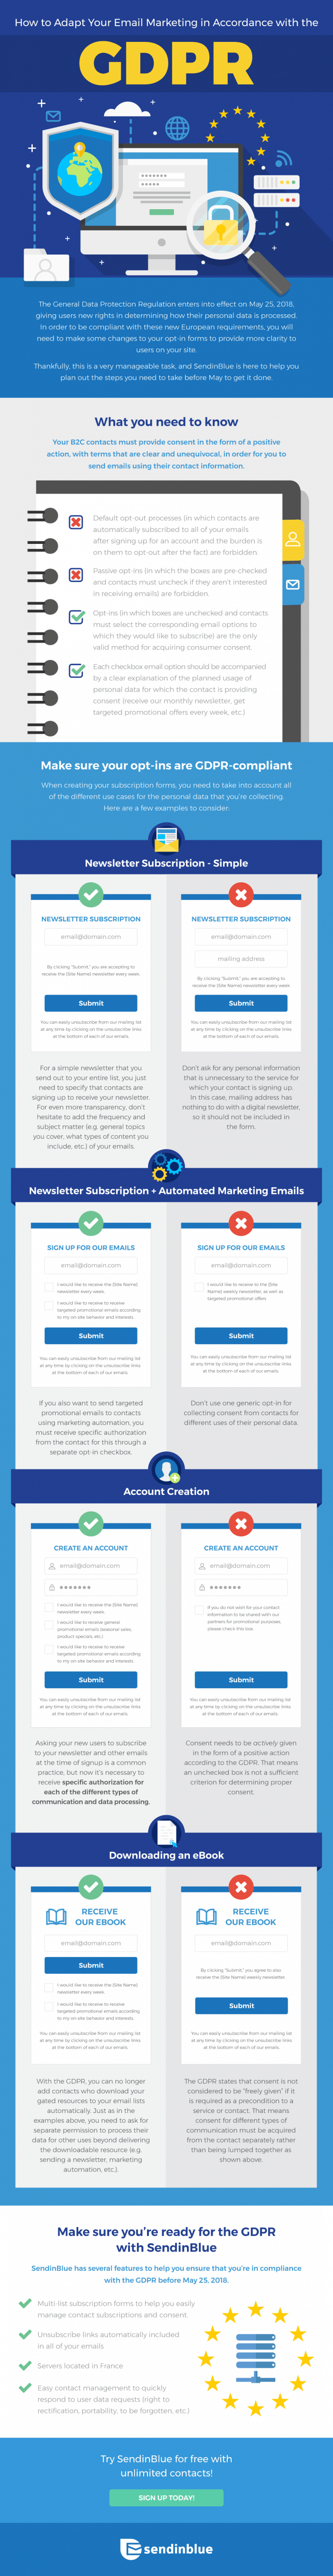 EU-compliant email marketing infographic